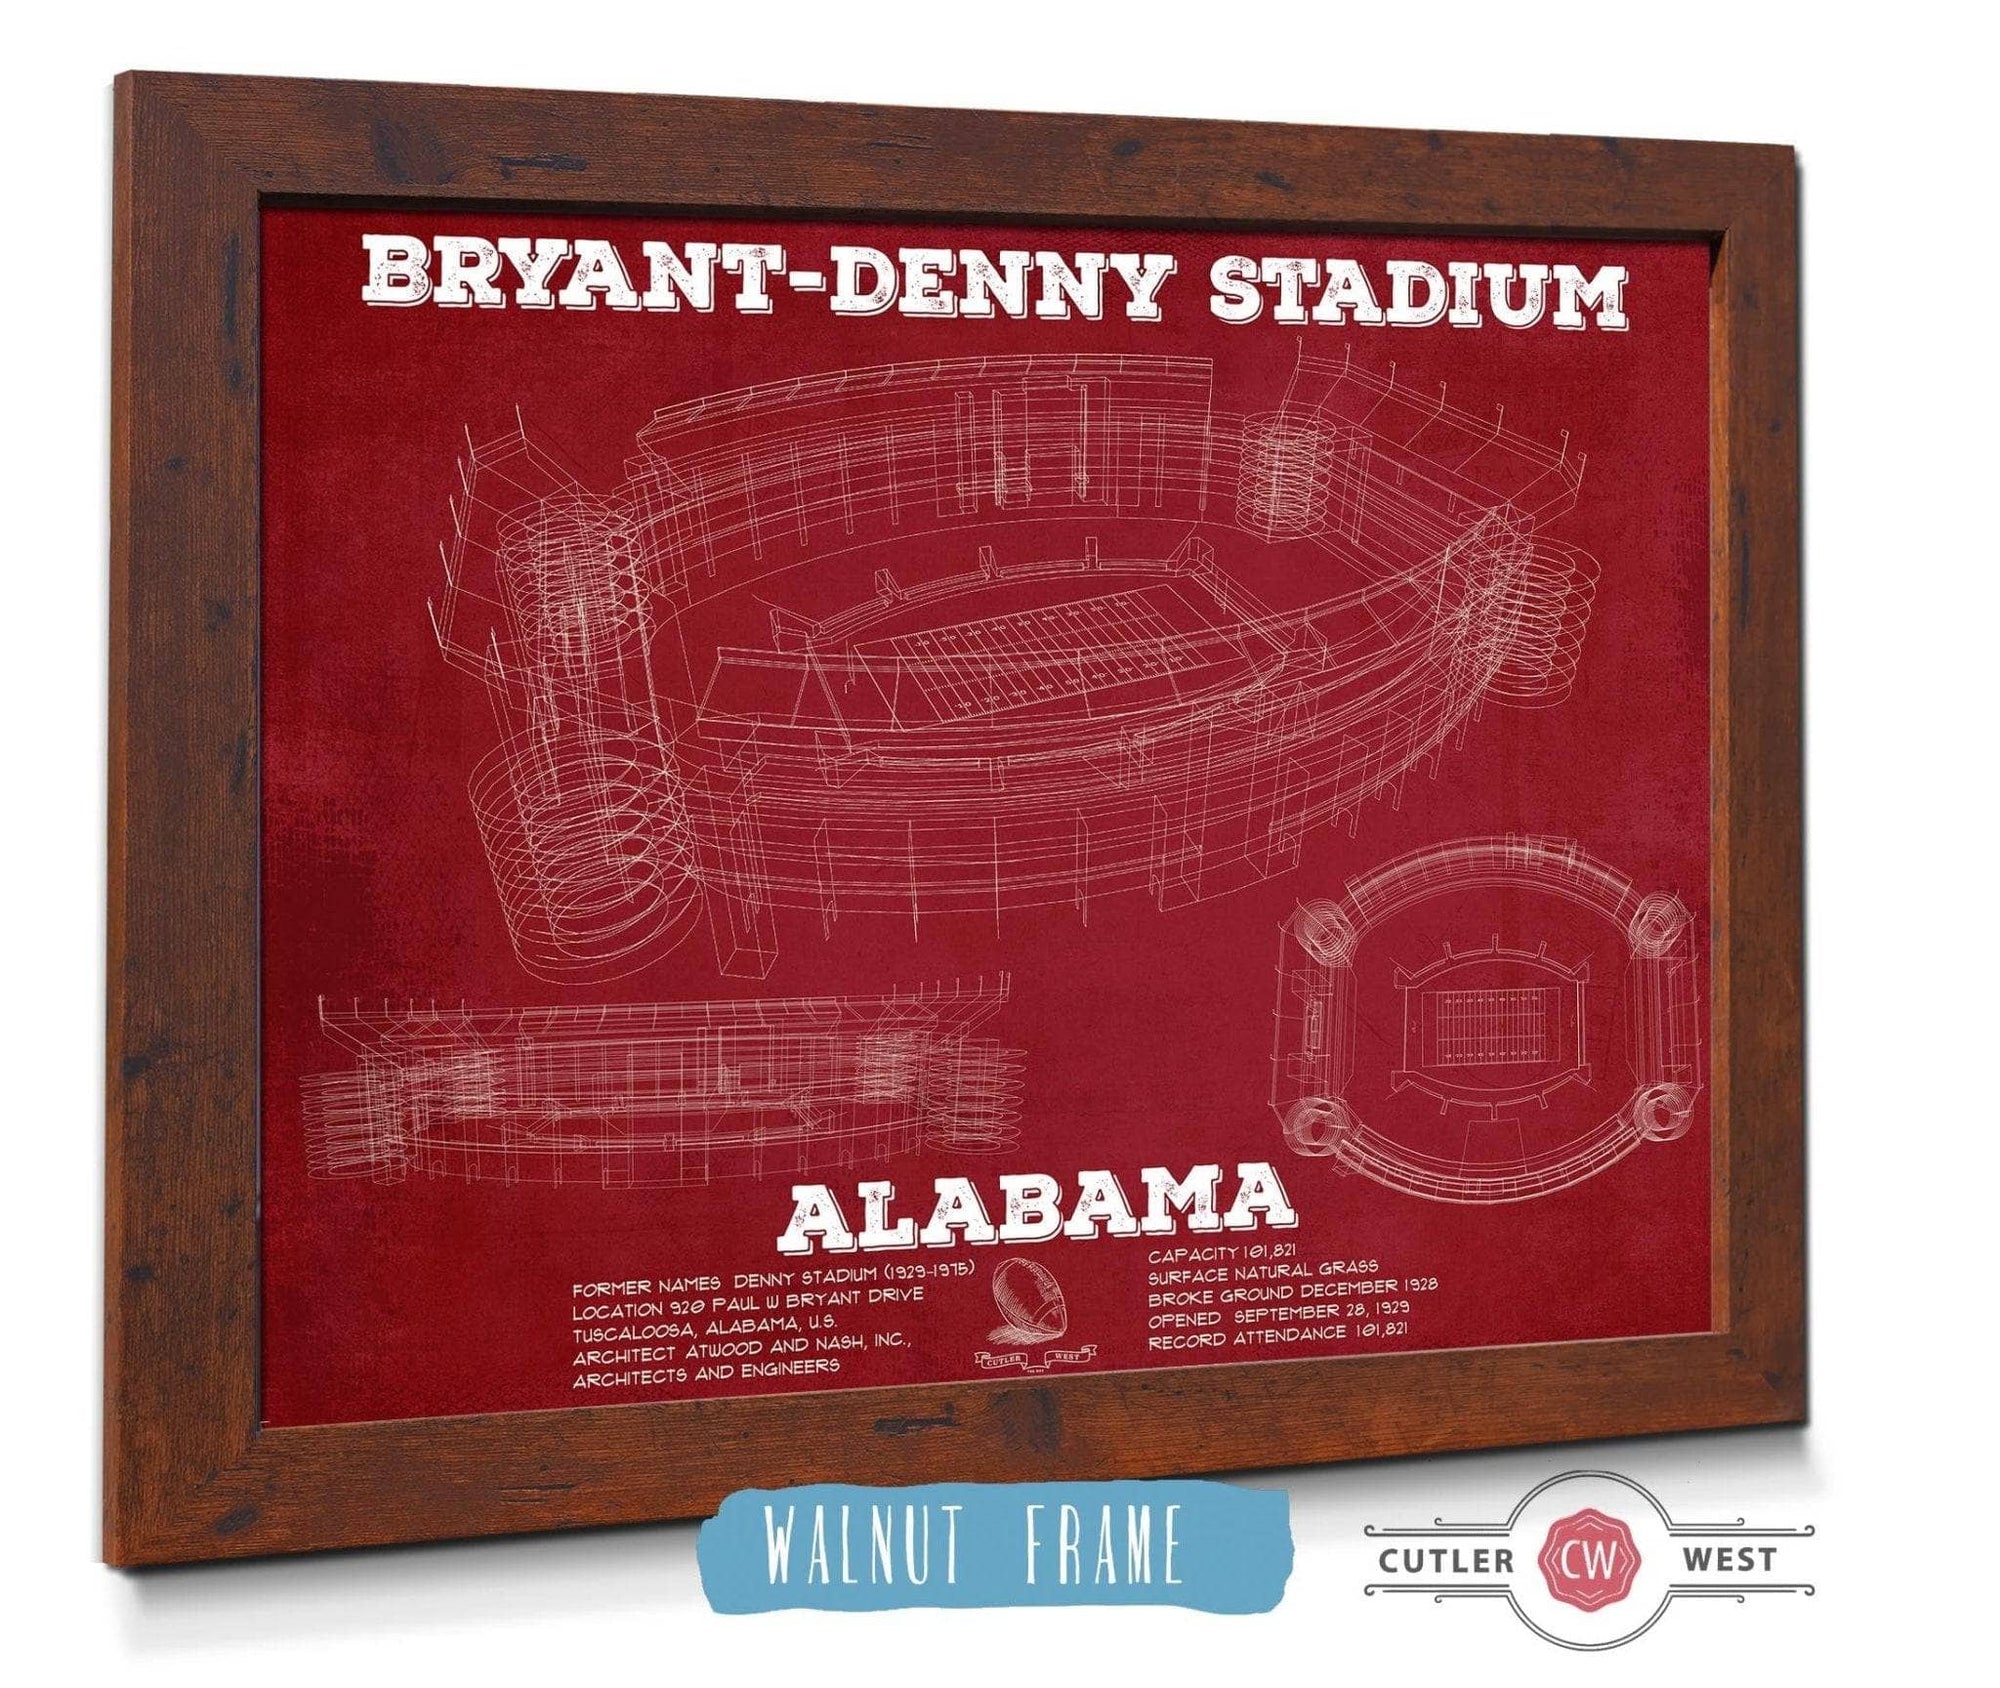 Cutler West College Football Collection Alabama Crimson Tide Stadium Art - Bryant-Denny Stadium Vintage Seating Chart